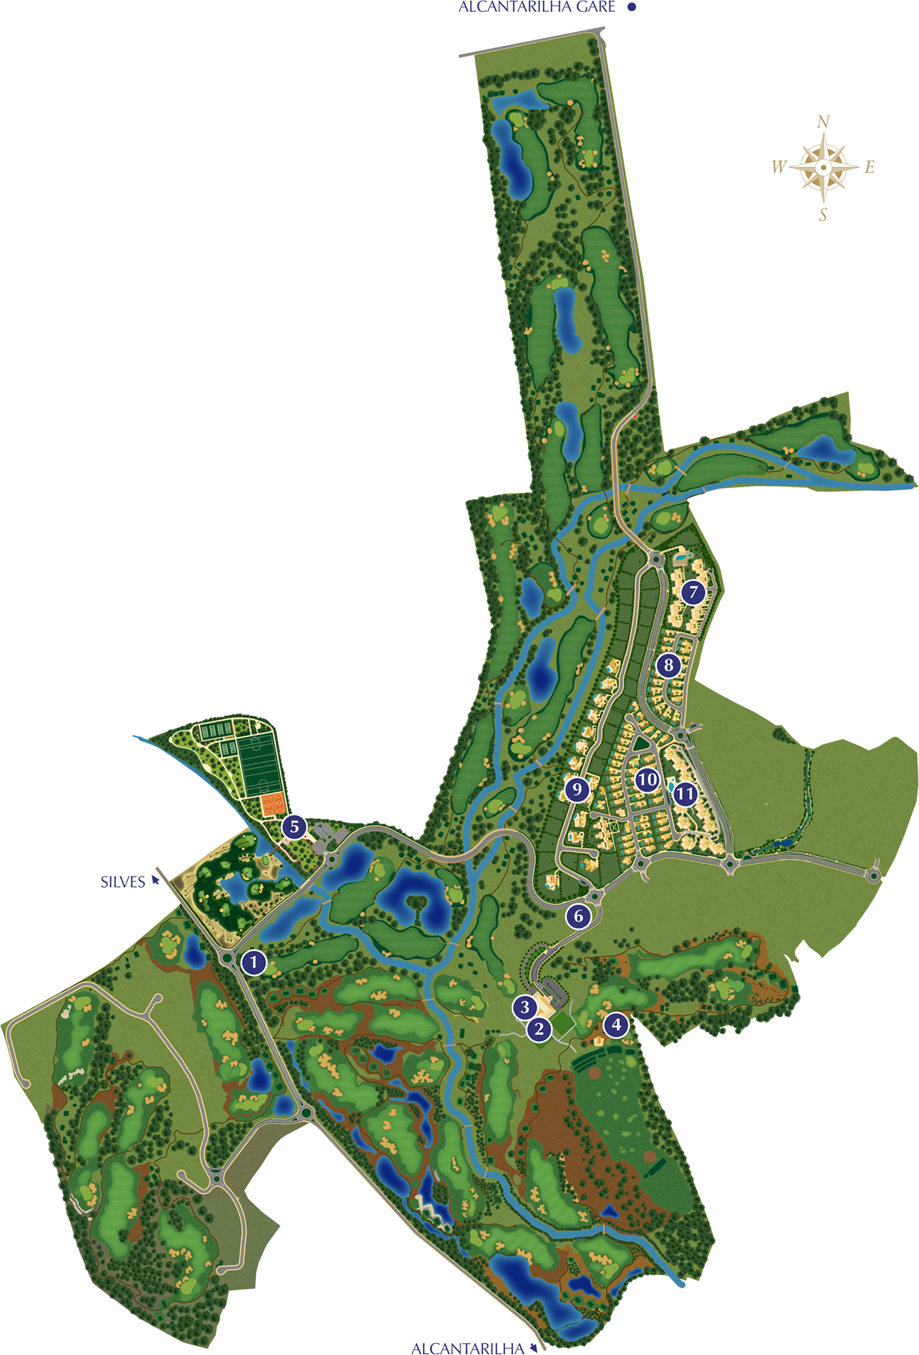 Amendoeira Golf Resort - Mapa do Resort